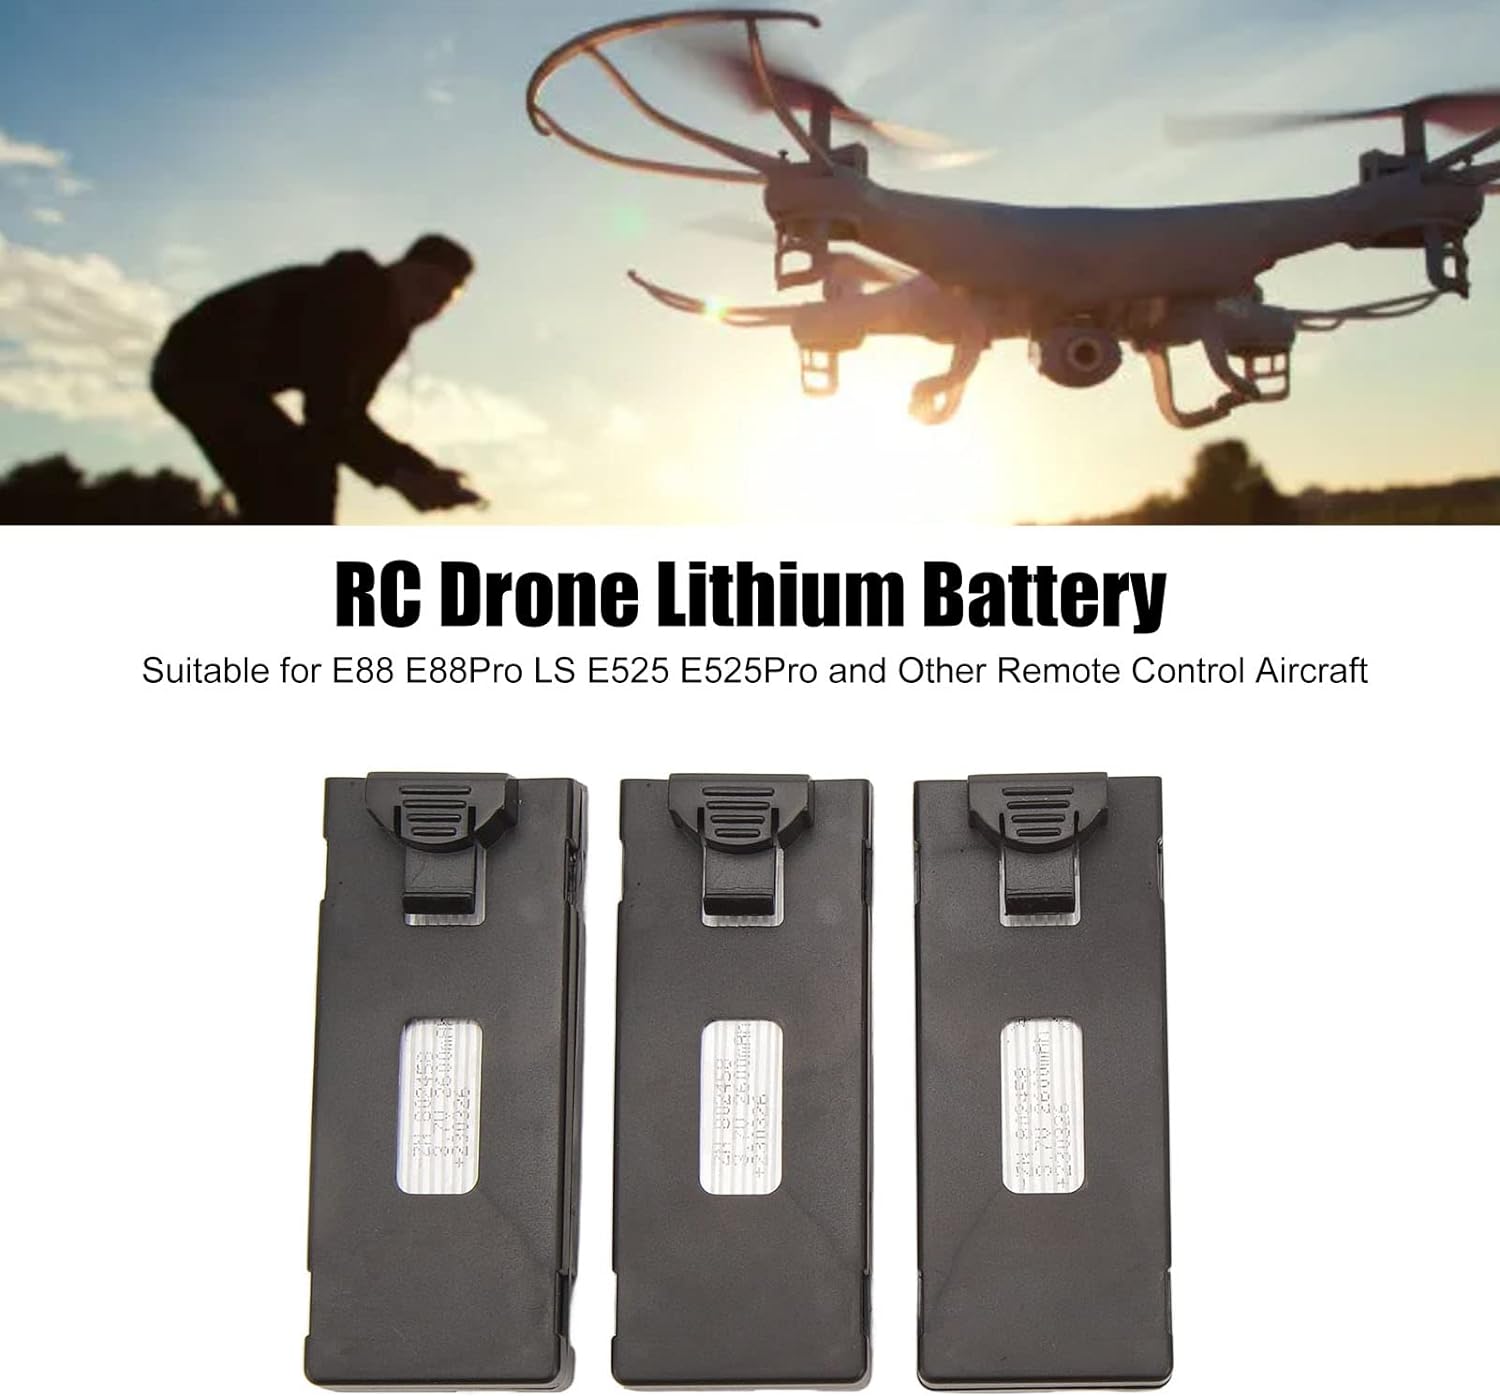 E88 Drone Battery, RC Drone Lithium Battery Suitable for E88 E88Pro LS E